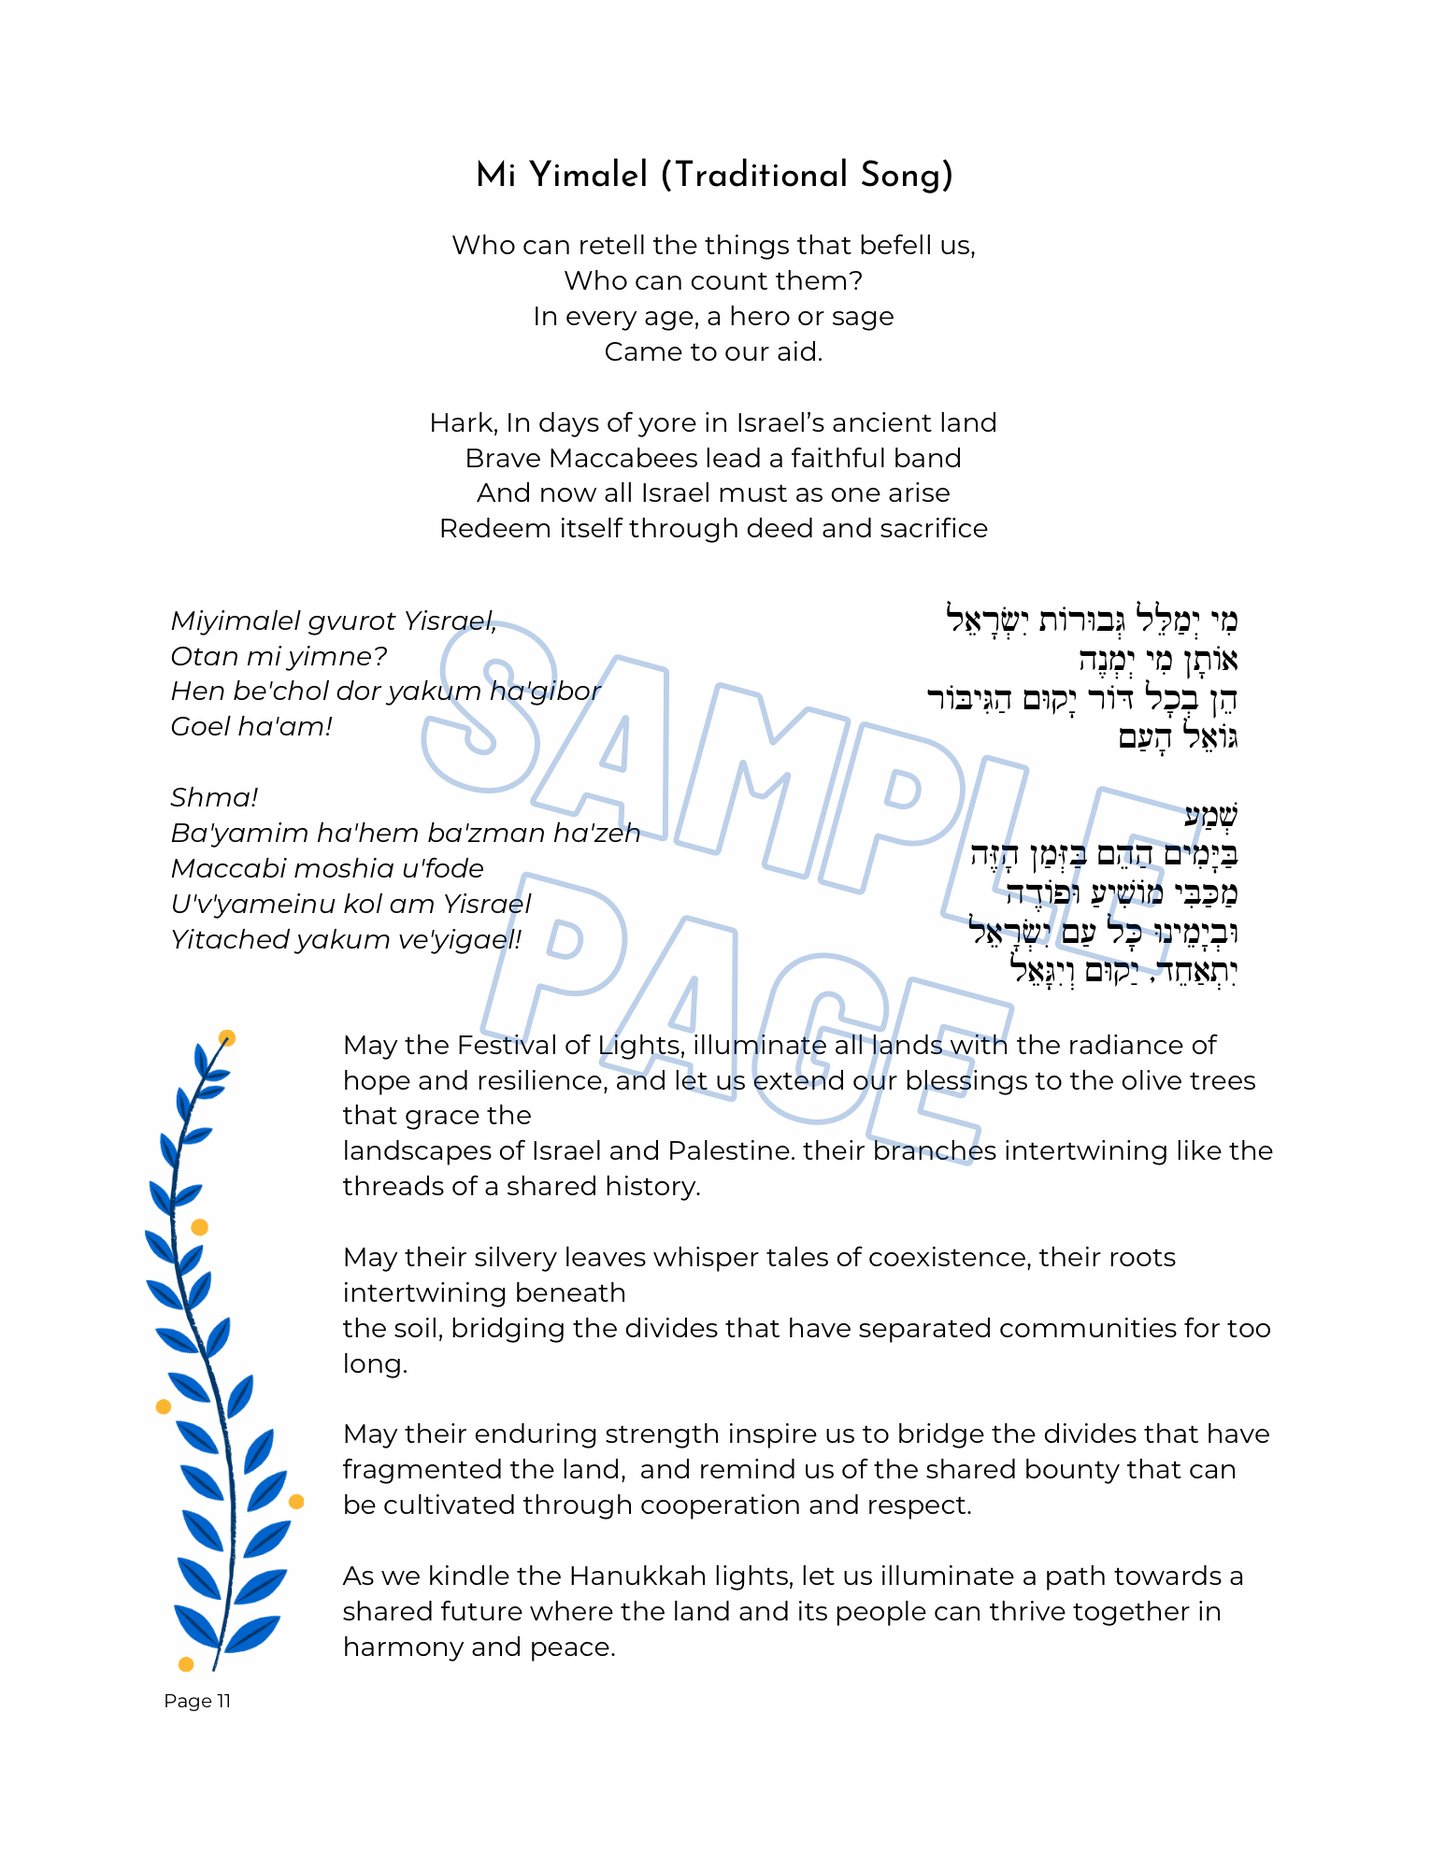 Hanukkah Seder Haggadah  (PDF)